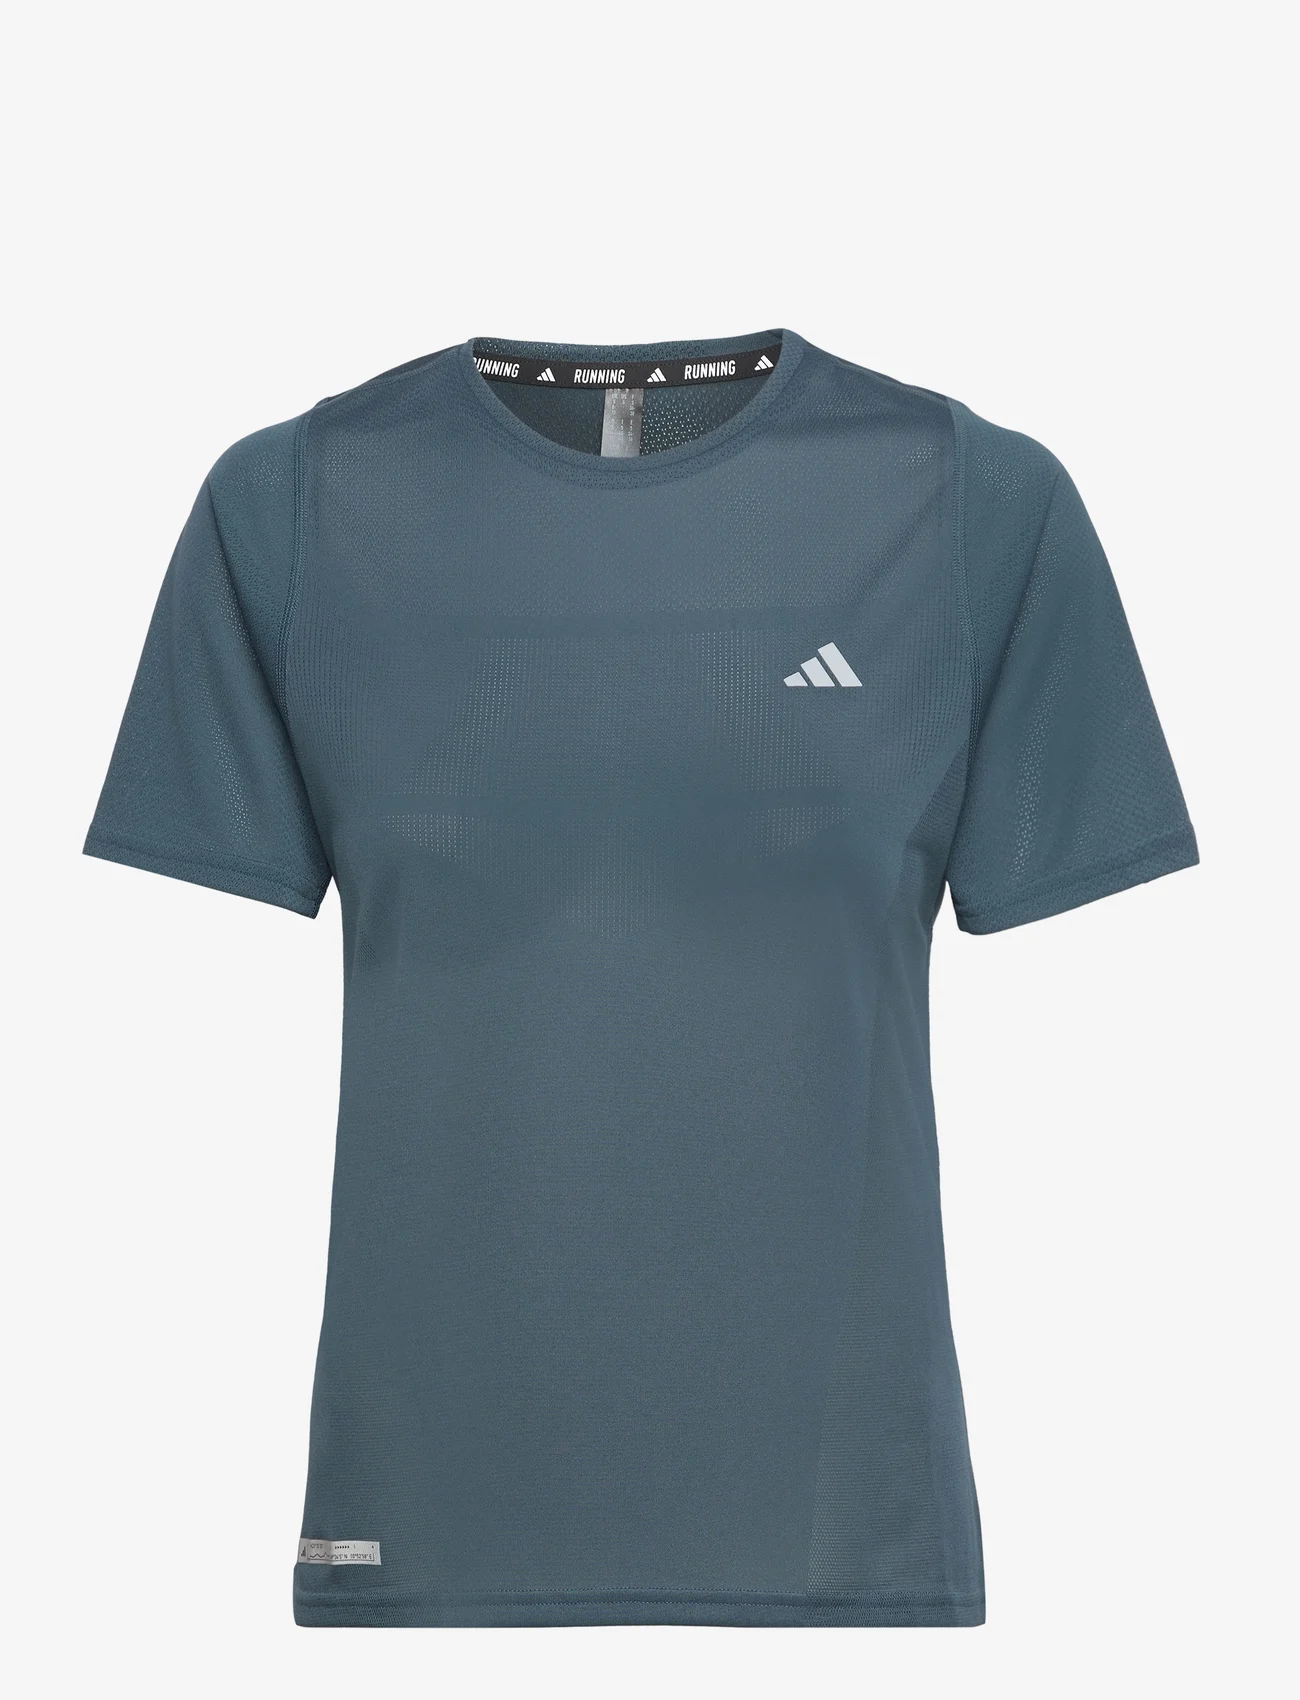 adidas Performance - Ultimate Knit T-Shirt - t-shirts - arcngt - 0